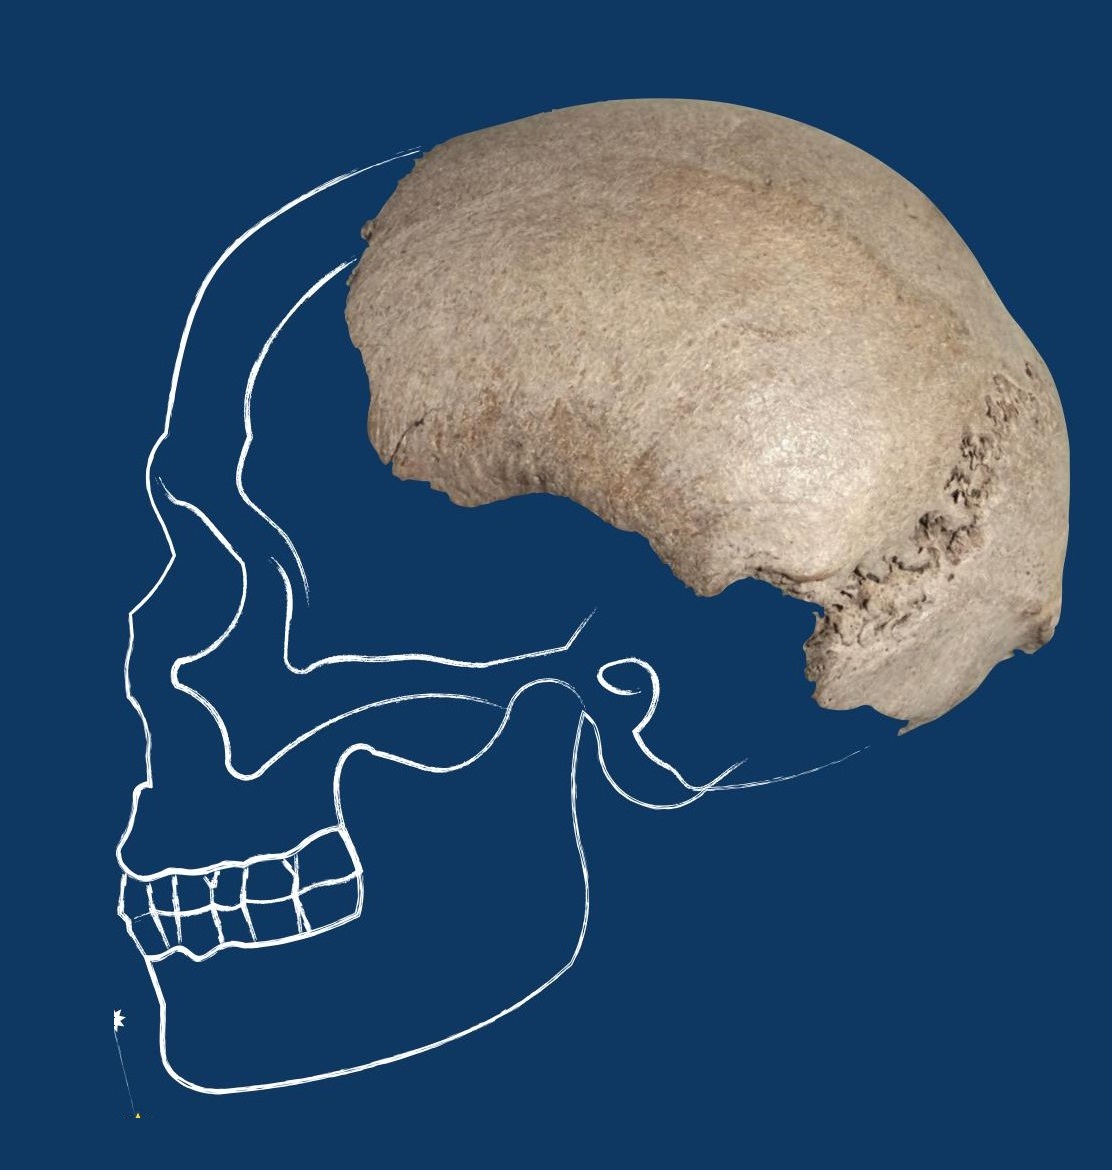 ACAMAR - Fossile di Homo sapiens nel Po